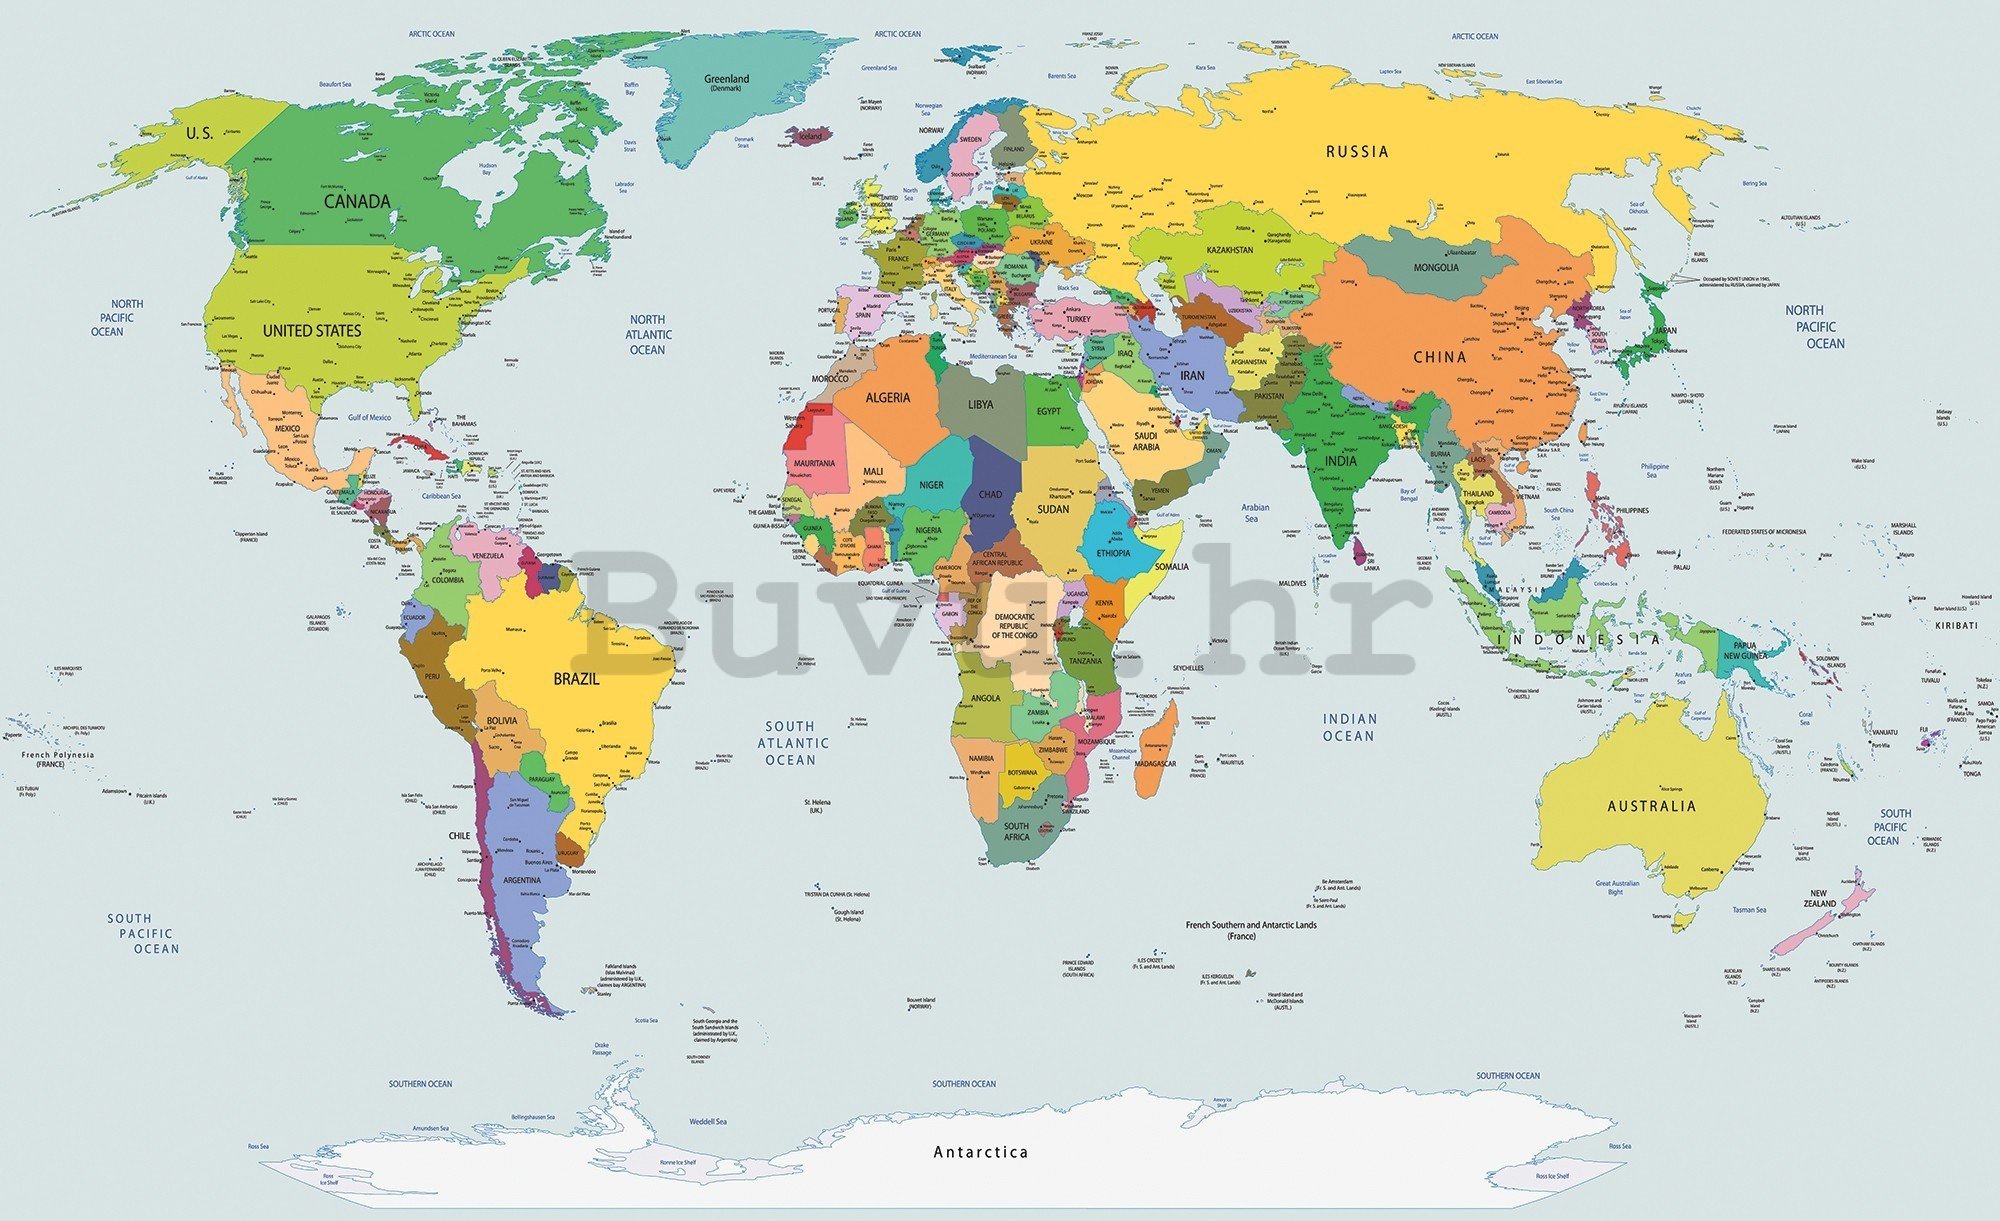 Vlies foto tapeta: Karta svijeta (2) - 416x254 cm